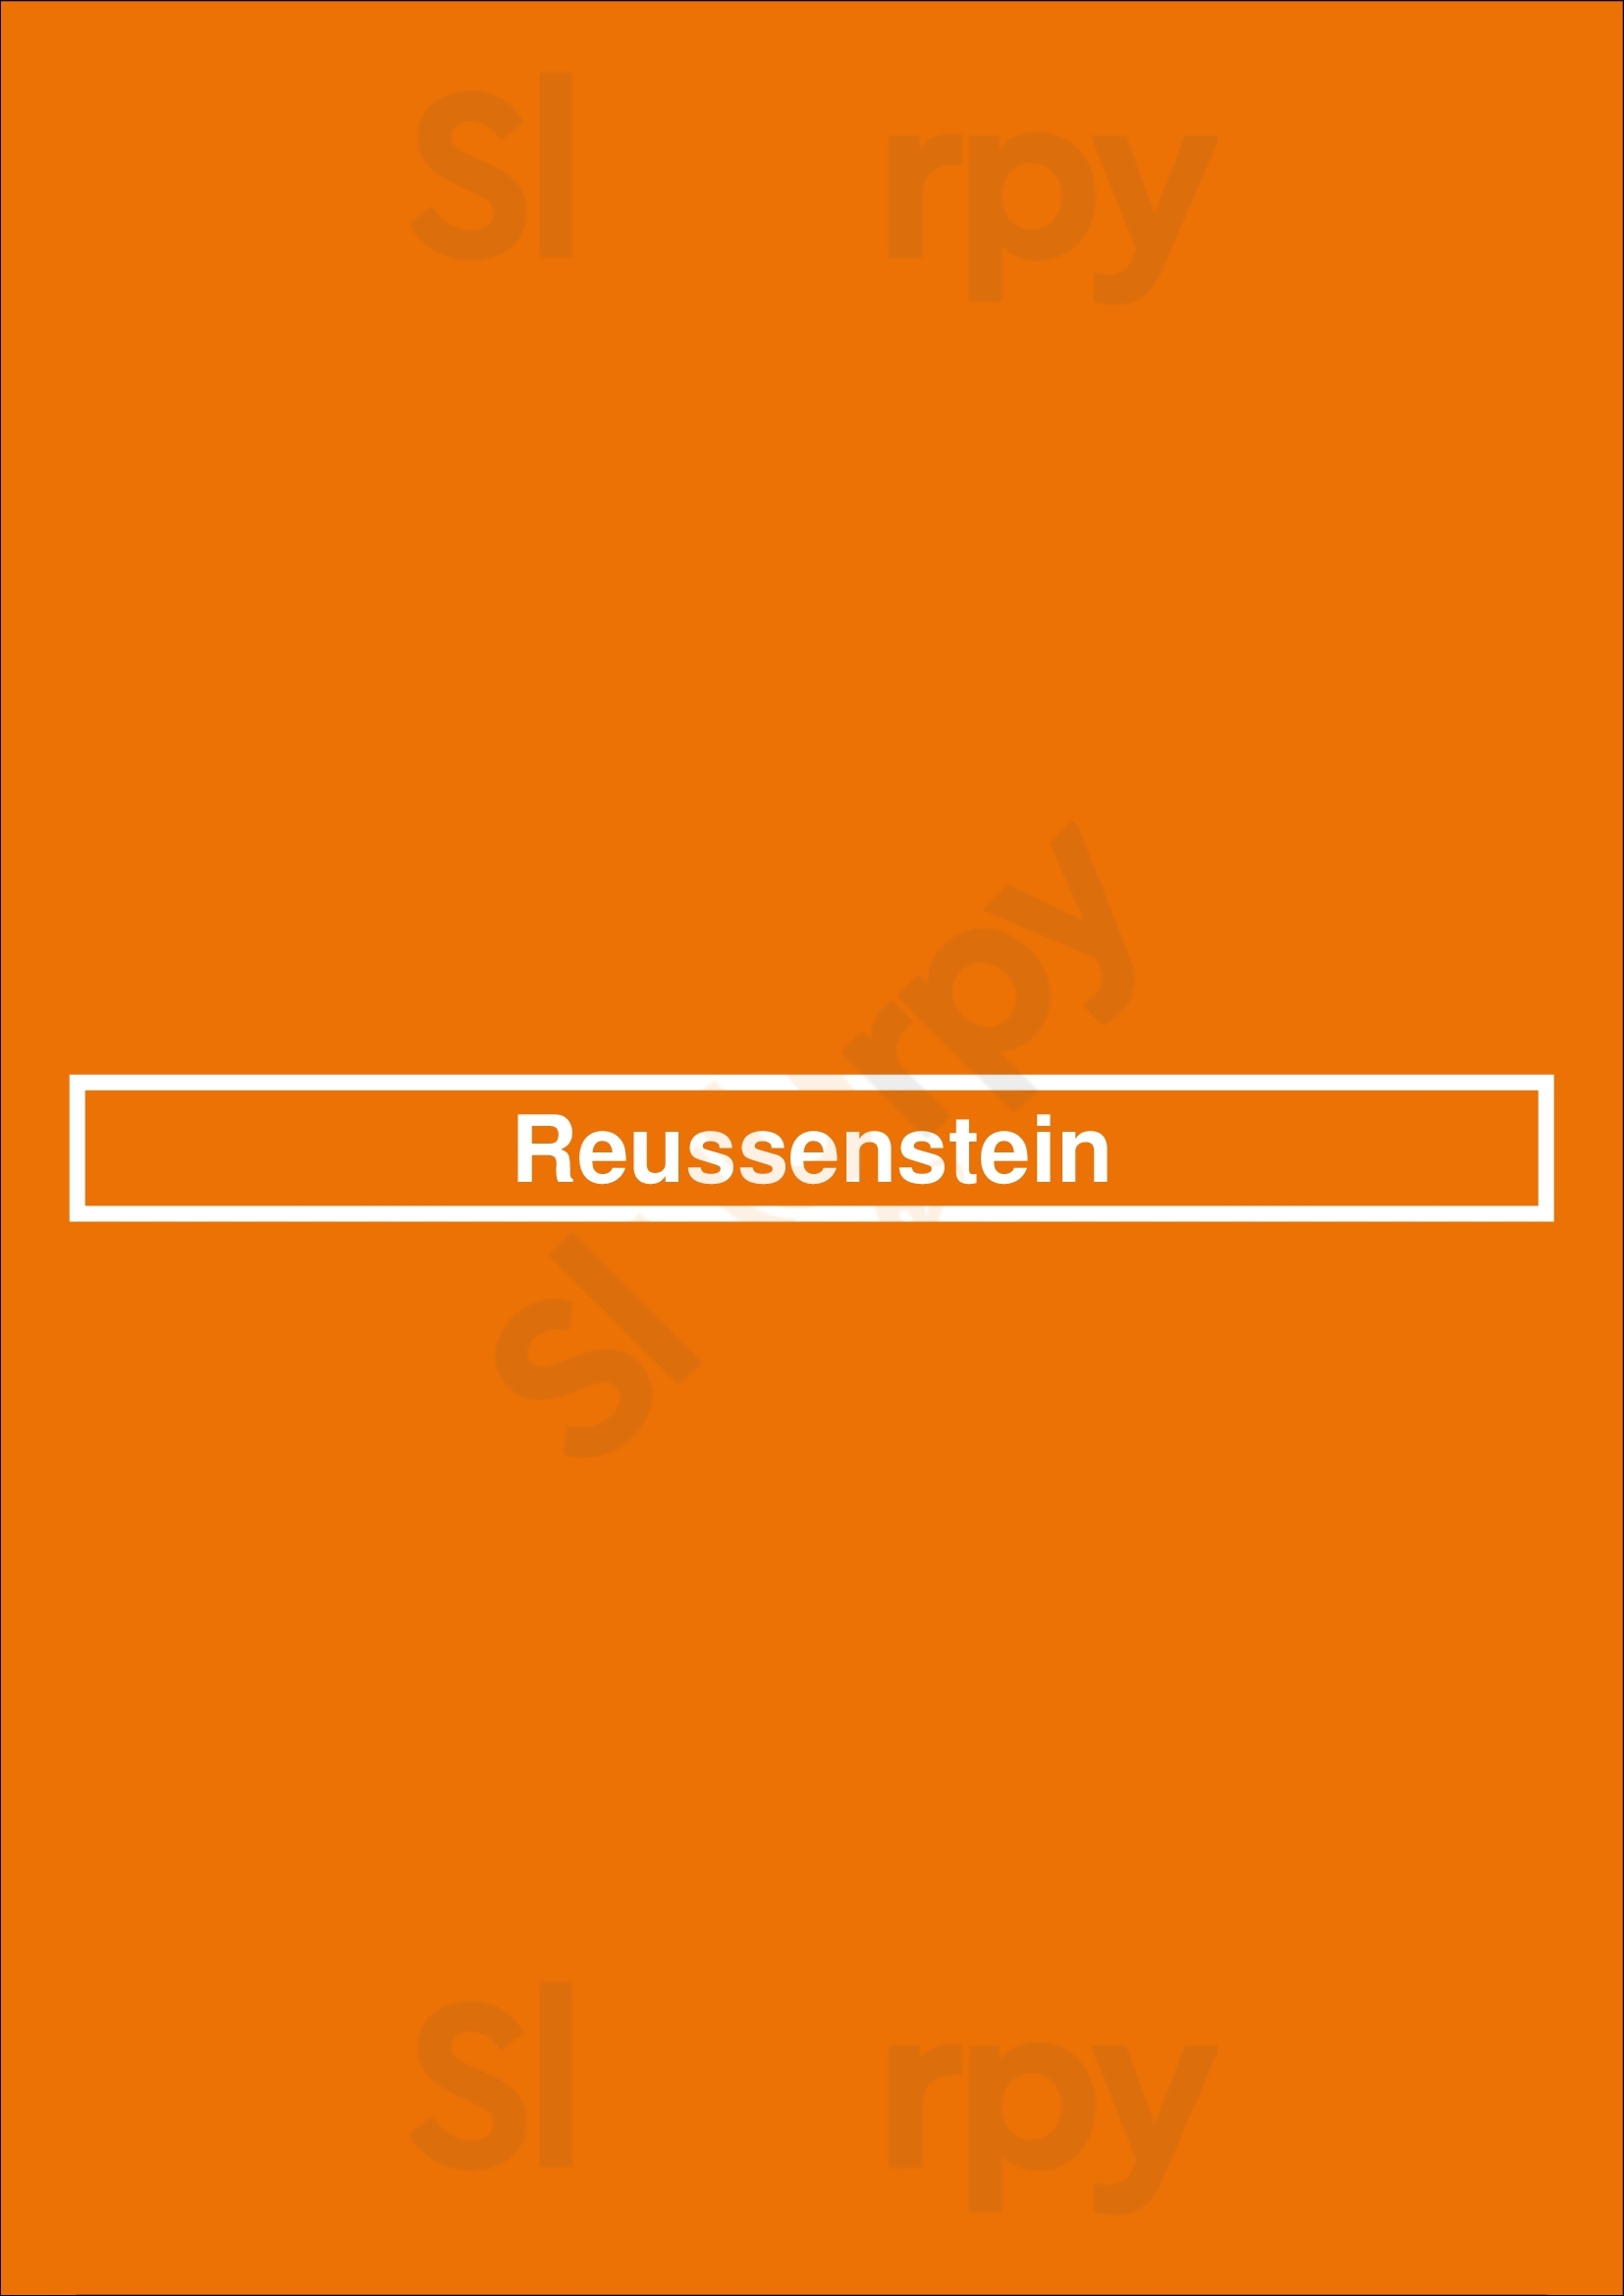 Reussenstein Böblingen Menu - 1